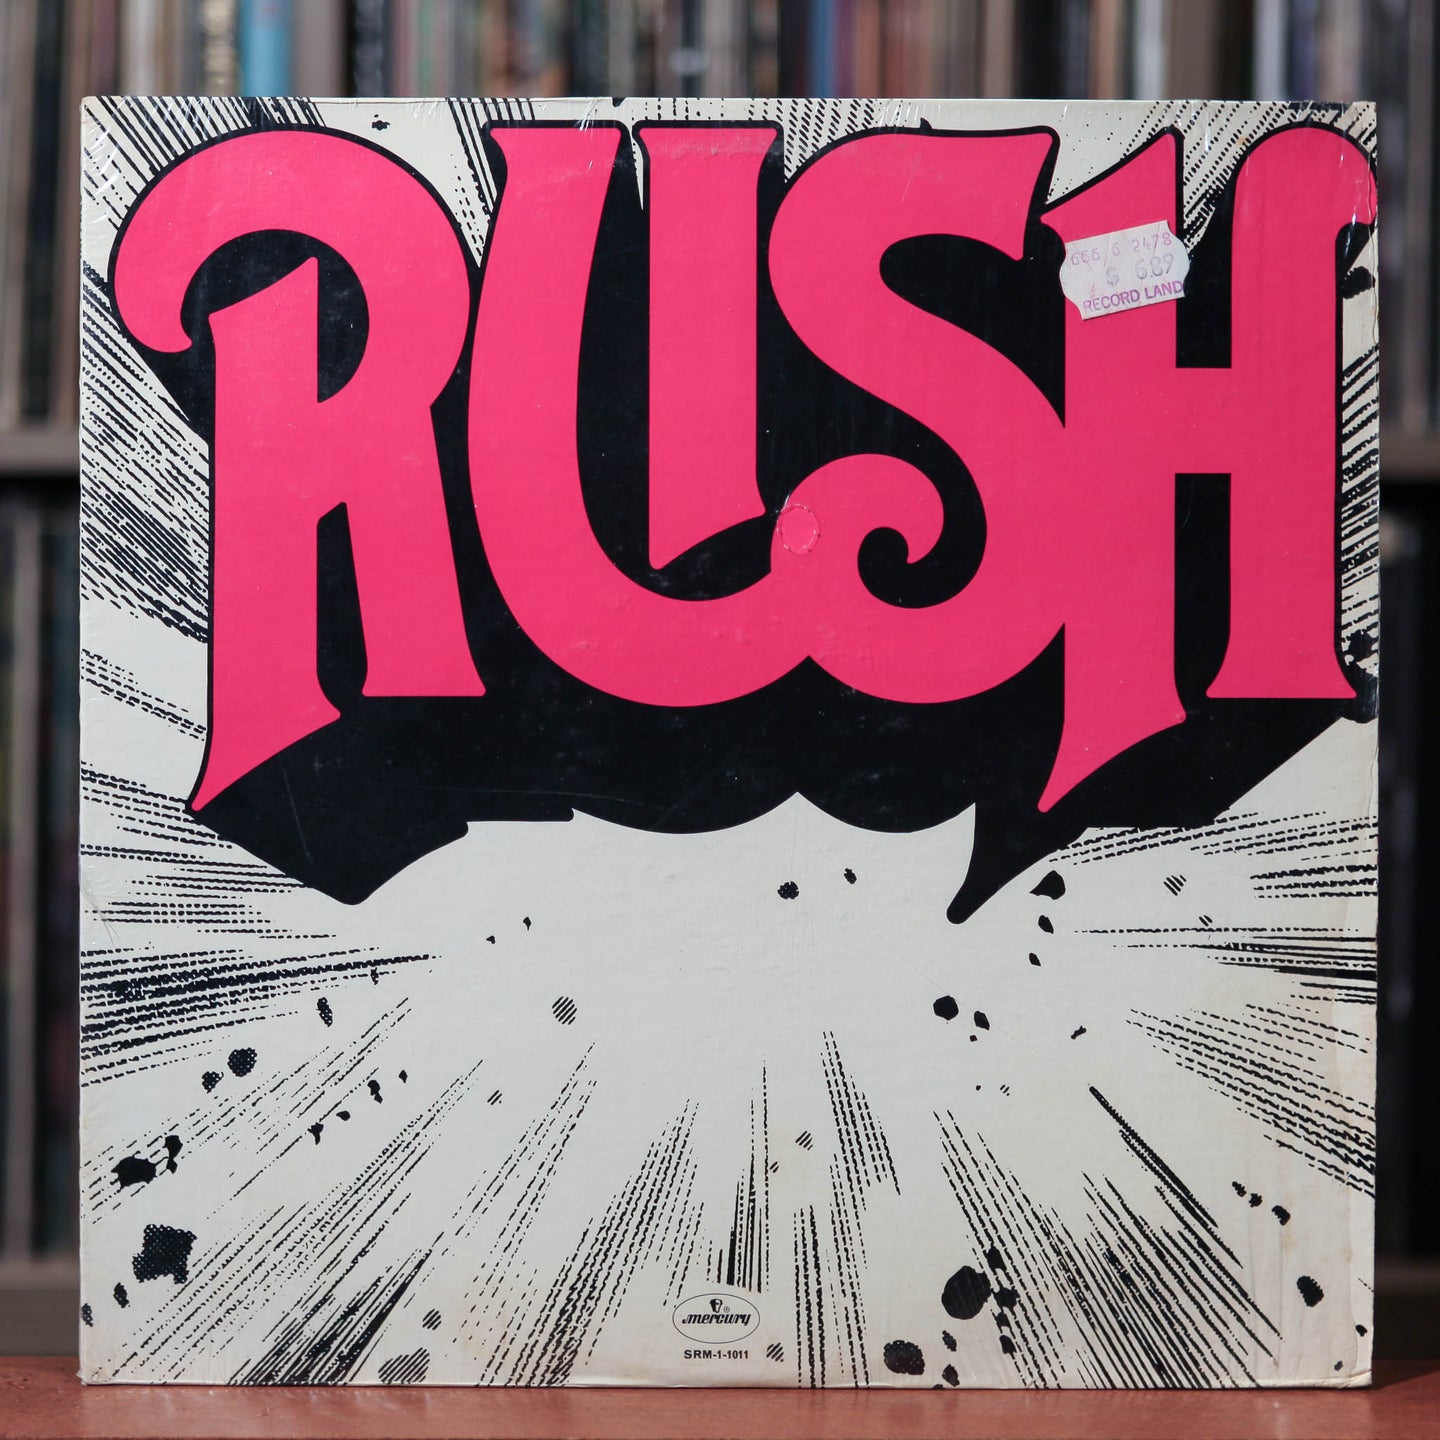 Rush - Self-Titled - 1976 Mercury, EX/VG w/Shrink